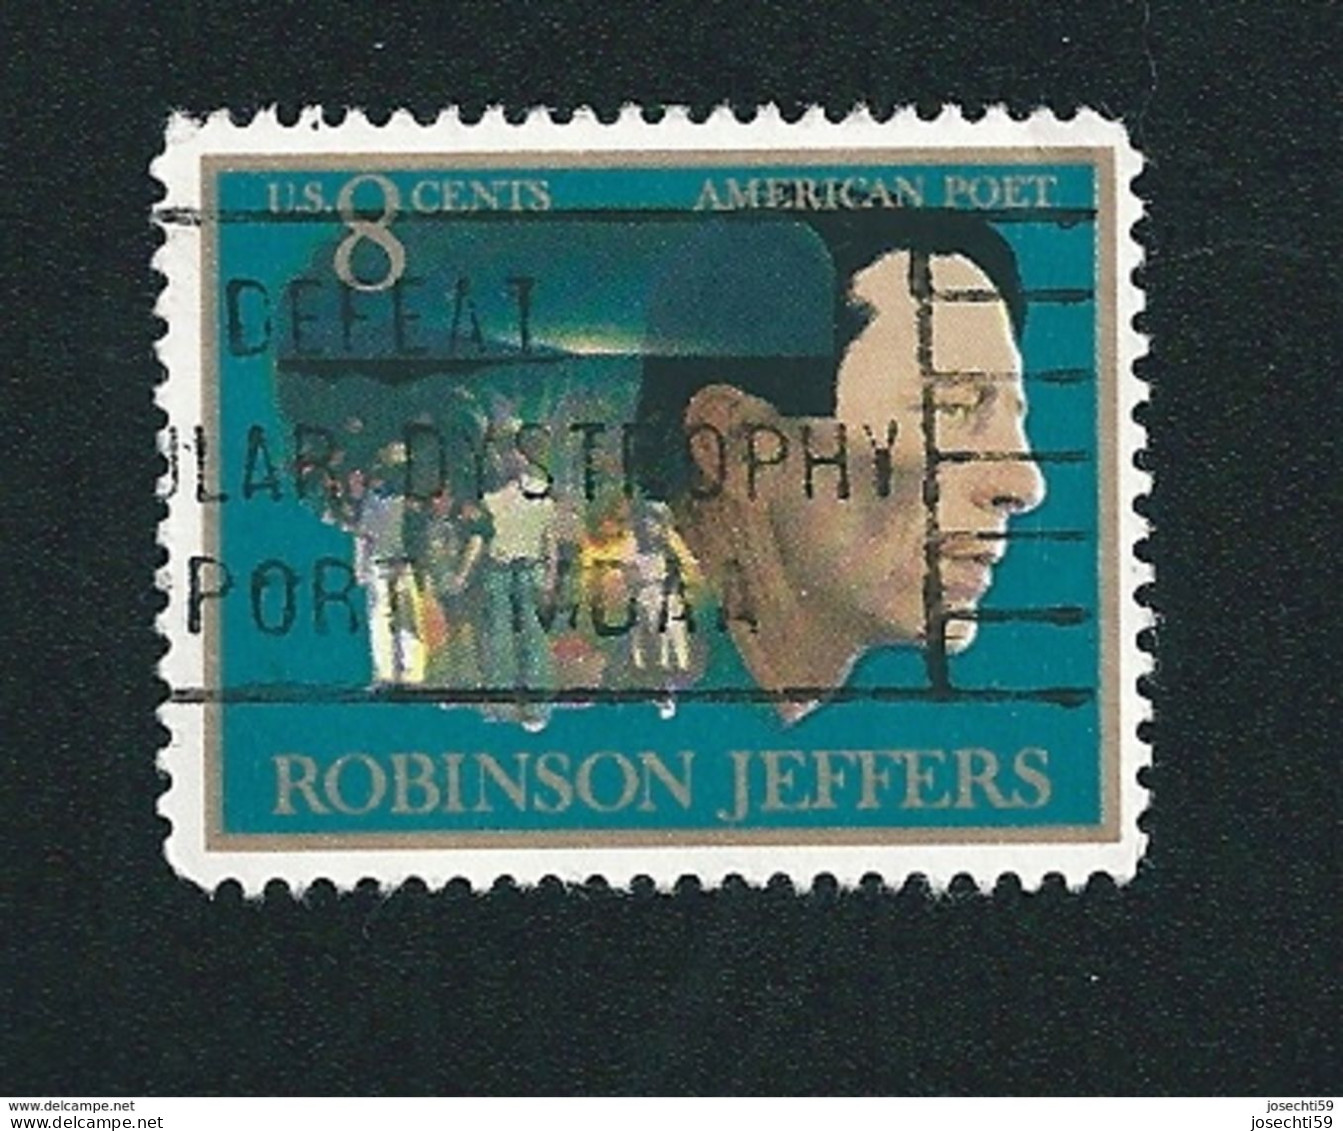 N° 1002 John Robinson Jeffers (1887-1962), American Poet   Timbre Etats-Unis (1973)   Oblitéré - Gebruikt